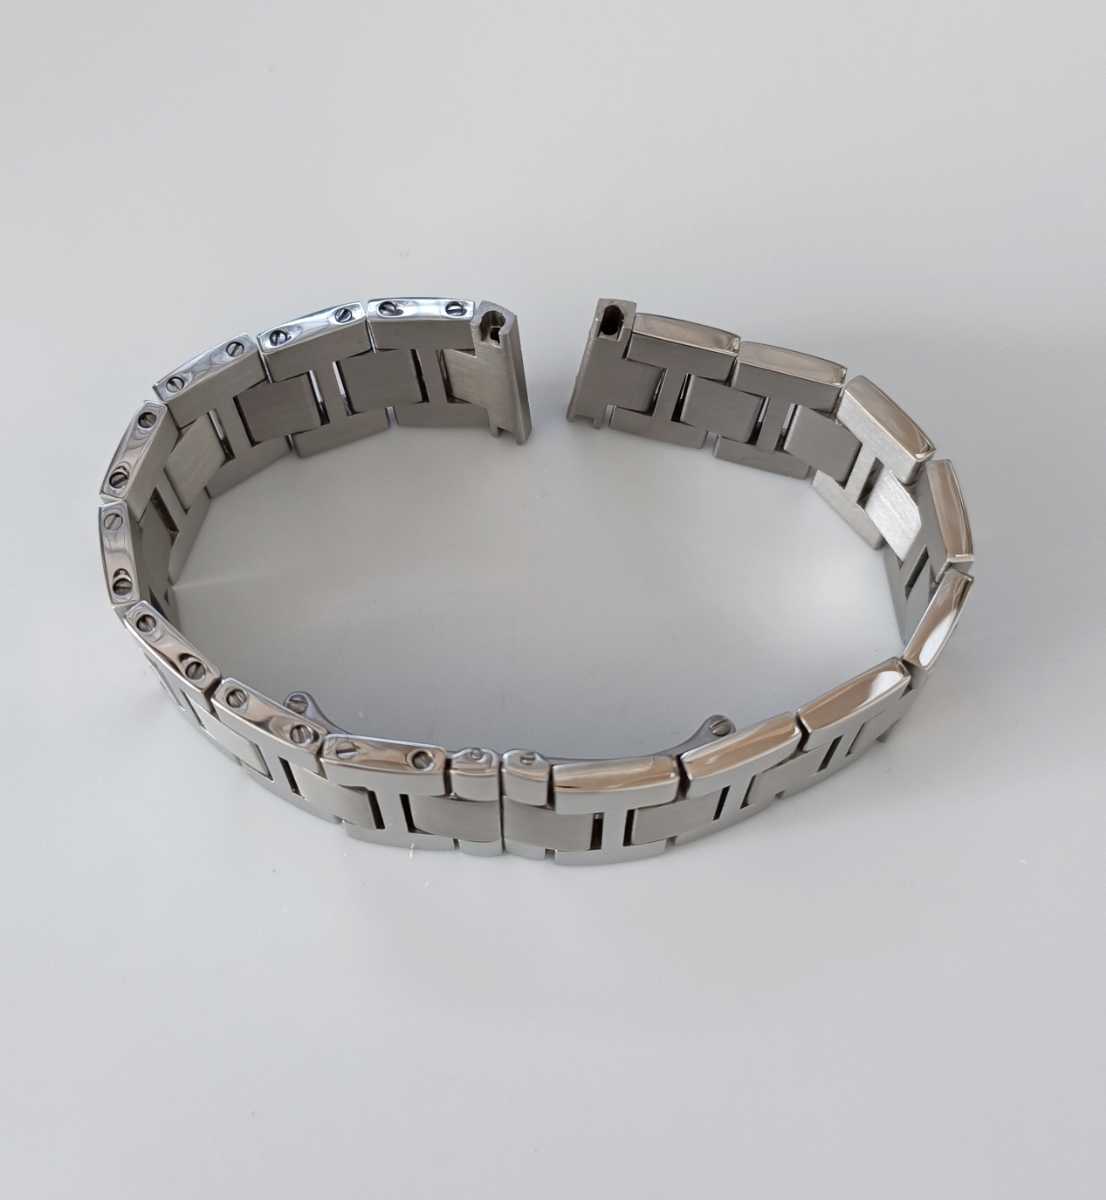 22mm wristwatch repair for exchange after market goods bracele mat × polish both opening buckle [ correspondence ] Cartier tanker etc. CARTIER